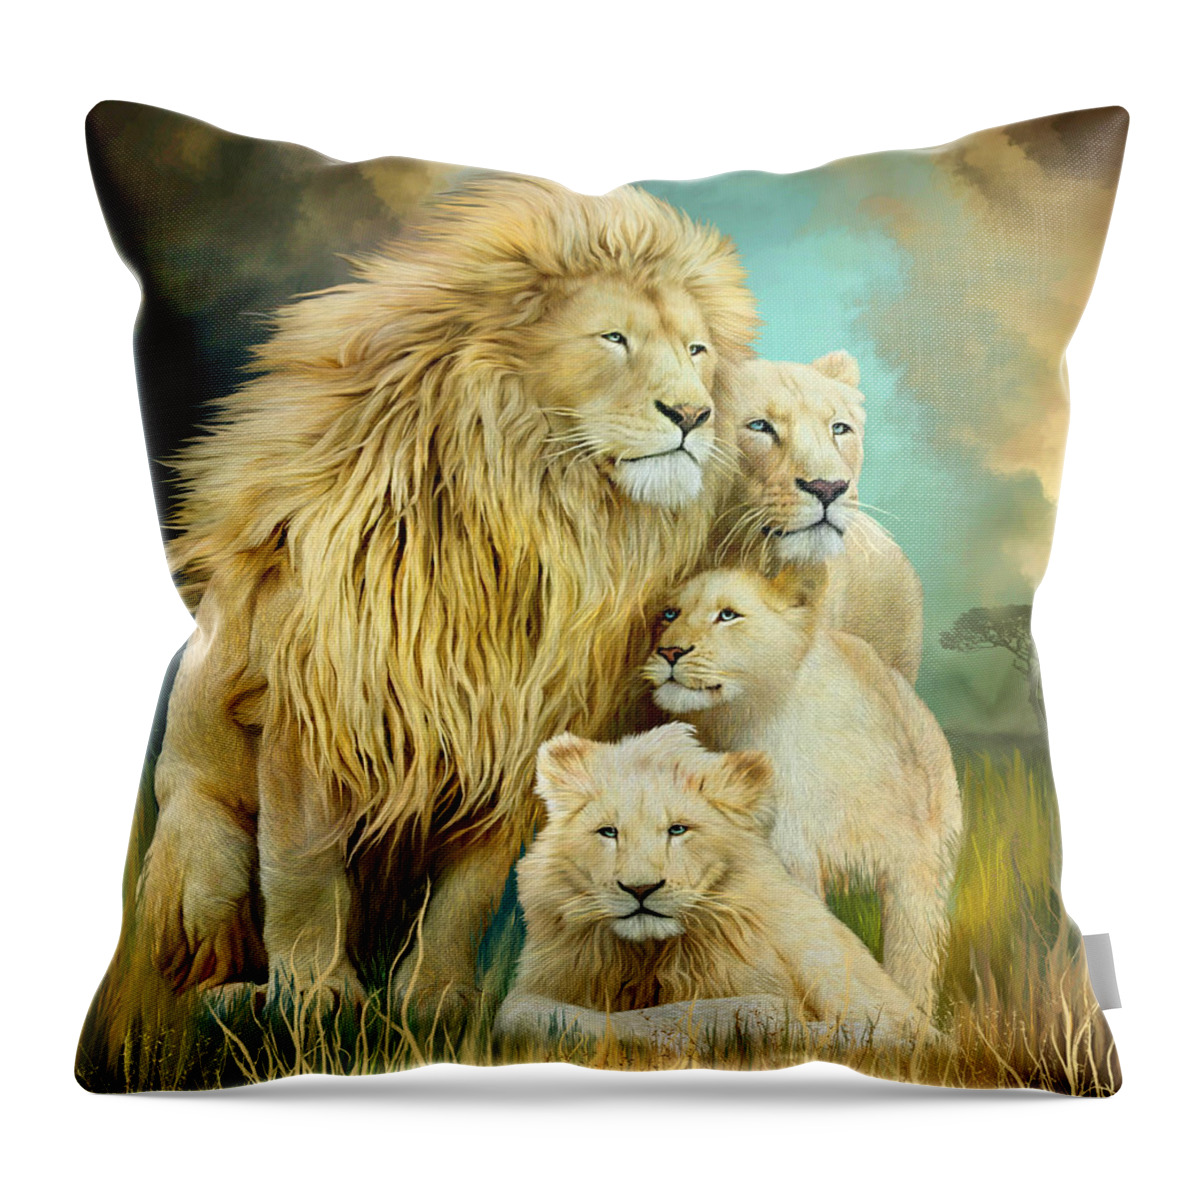 Carol Cavalaris Throw Pillow featuring the mixed media White Lion Family - Unity by Carol Cavalaris